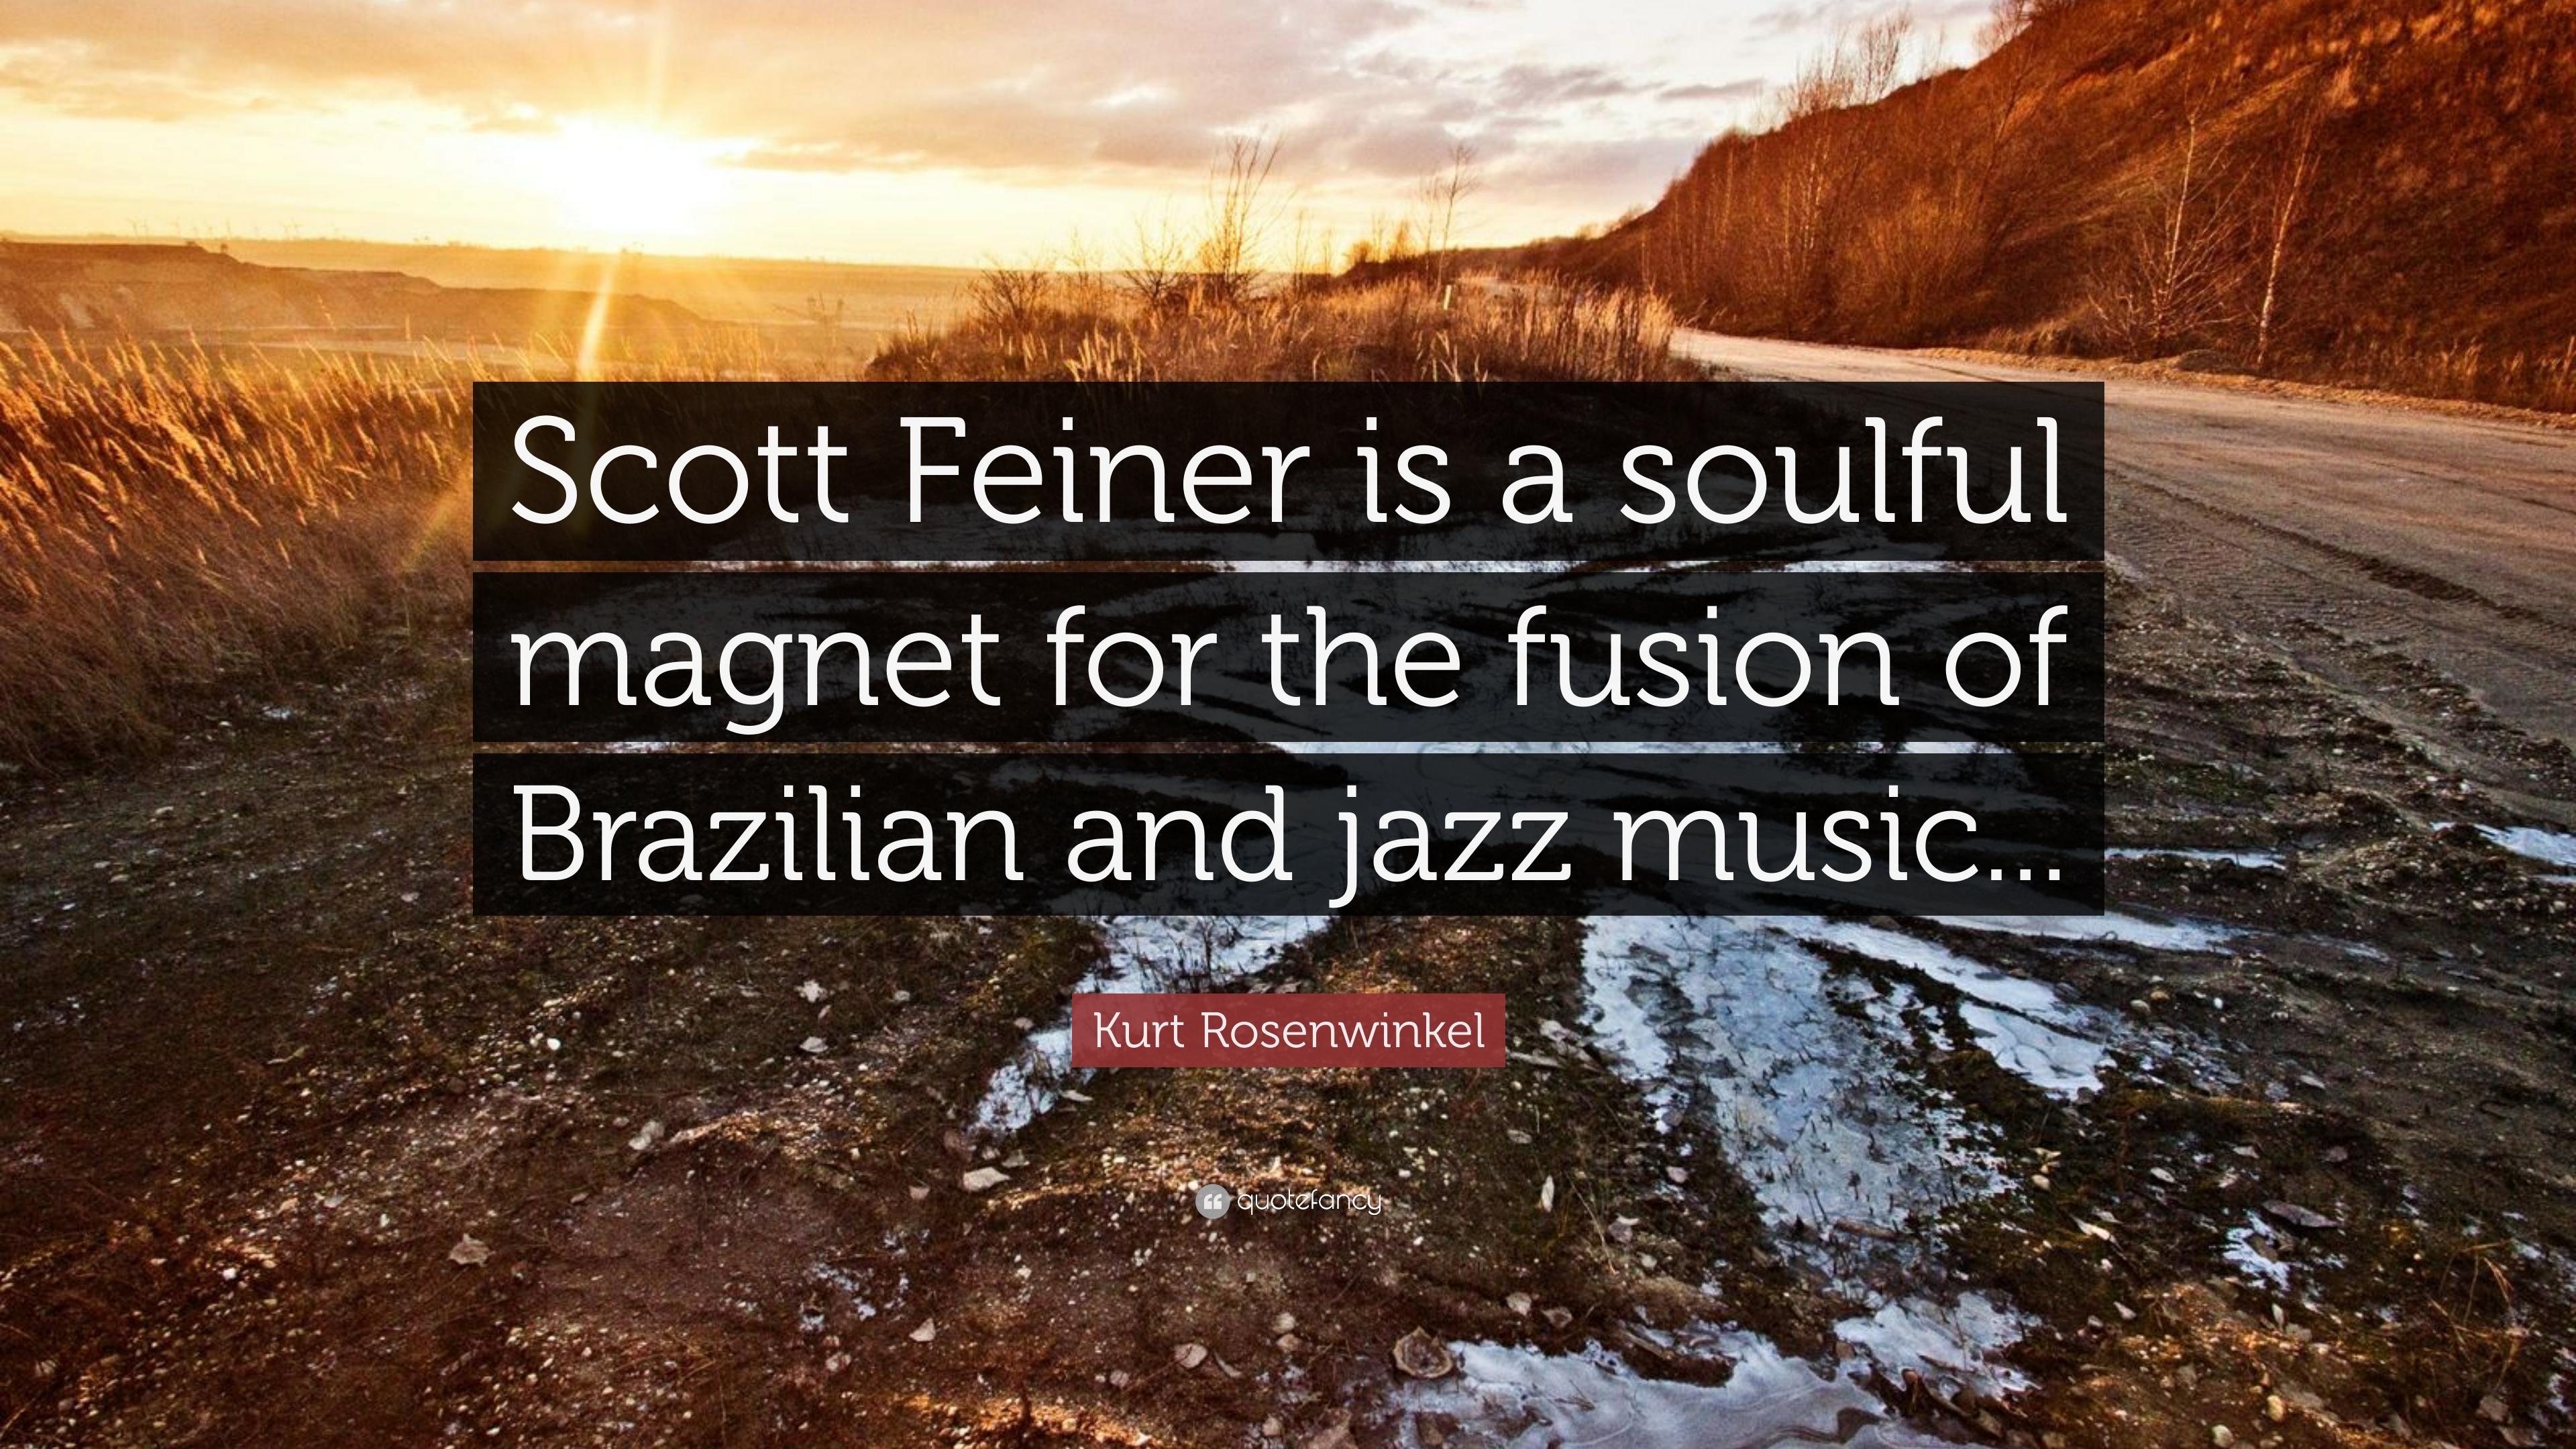 Kurt Rosenwinkel Quote: “Scott Feiner is a soulful magnet for